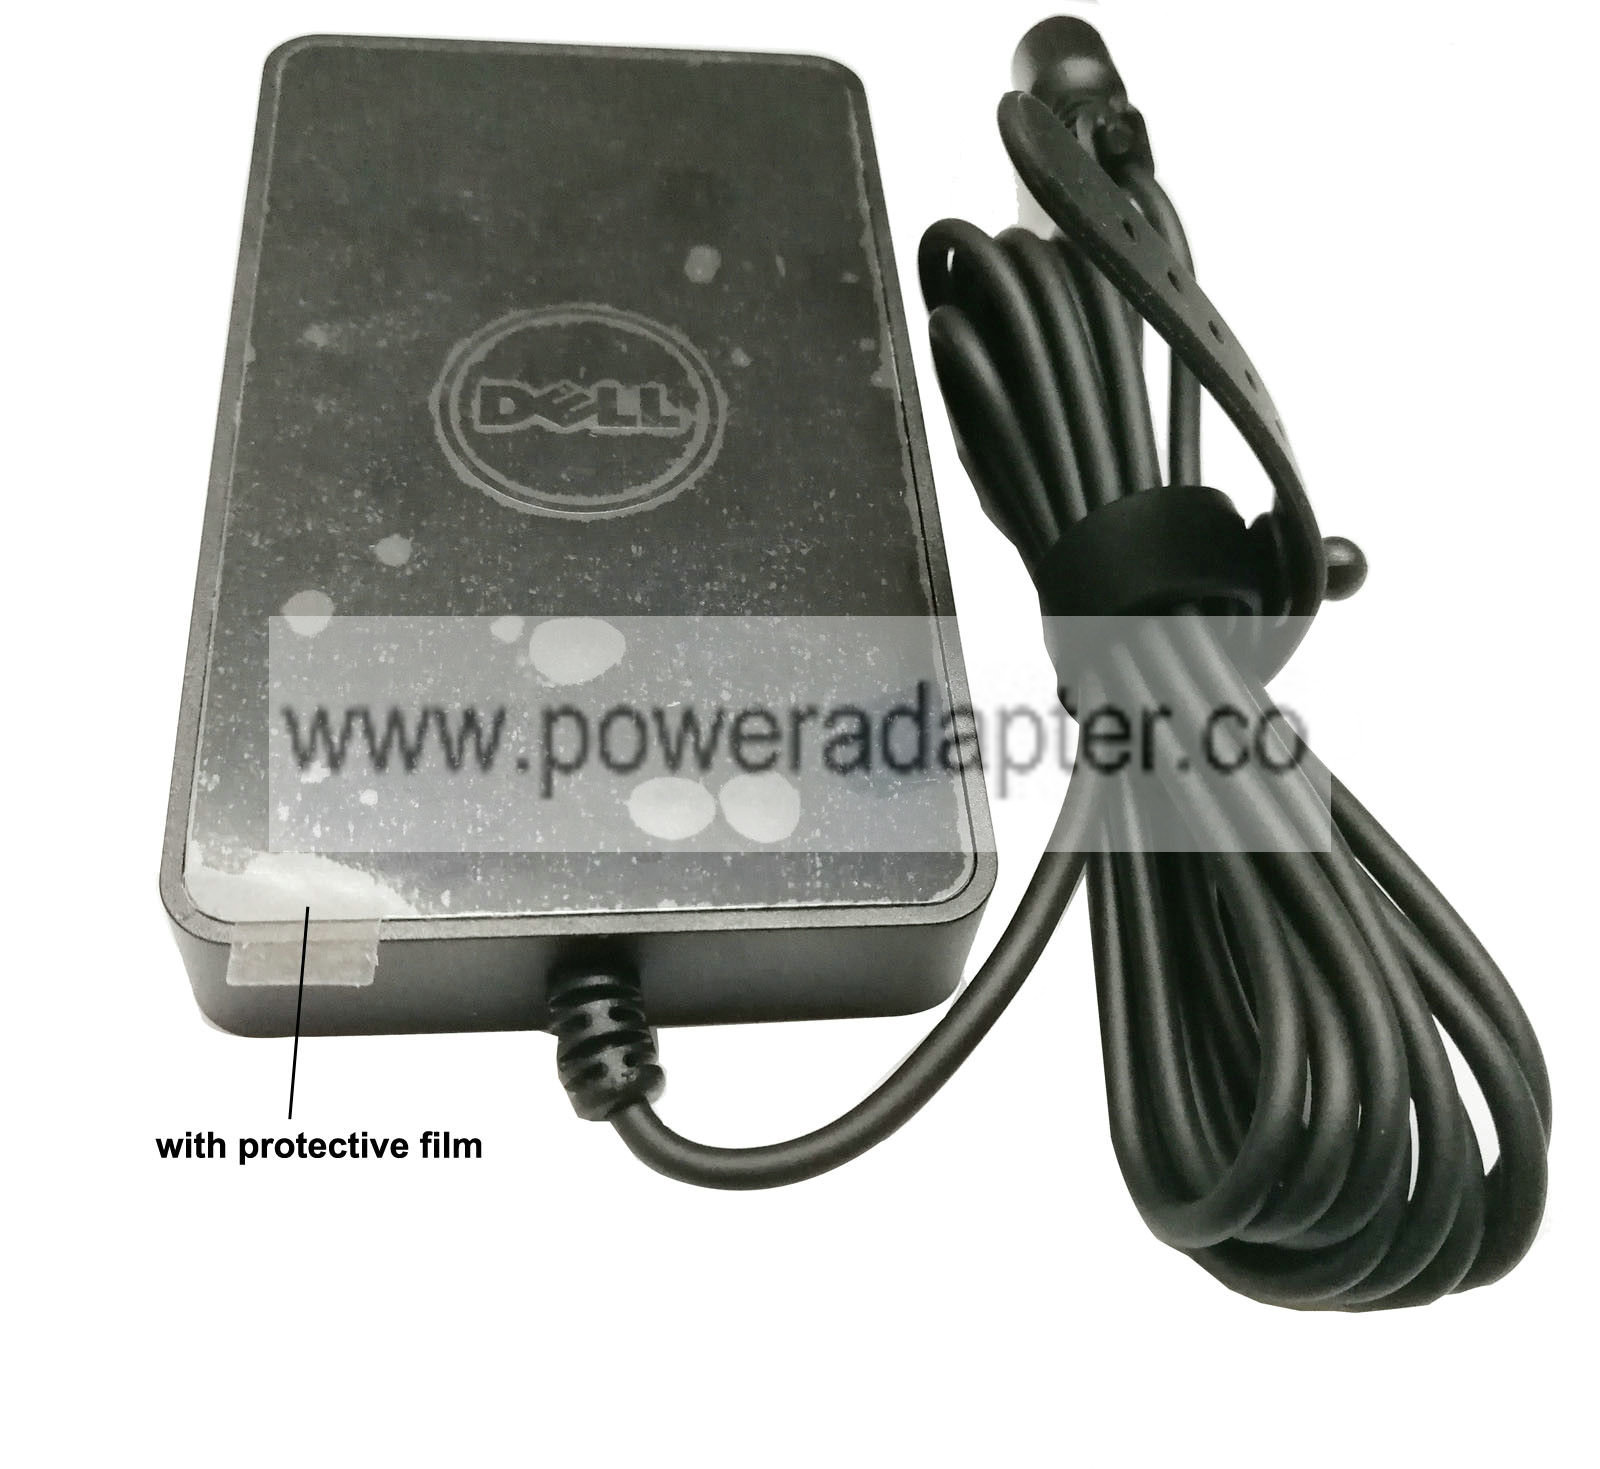 Genuine Dell Adamo 13 AC Adapter Charger BA45NE1 PA-1E 15V 3A 45W Power Supply Condition:Brand New and Original AC